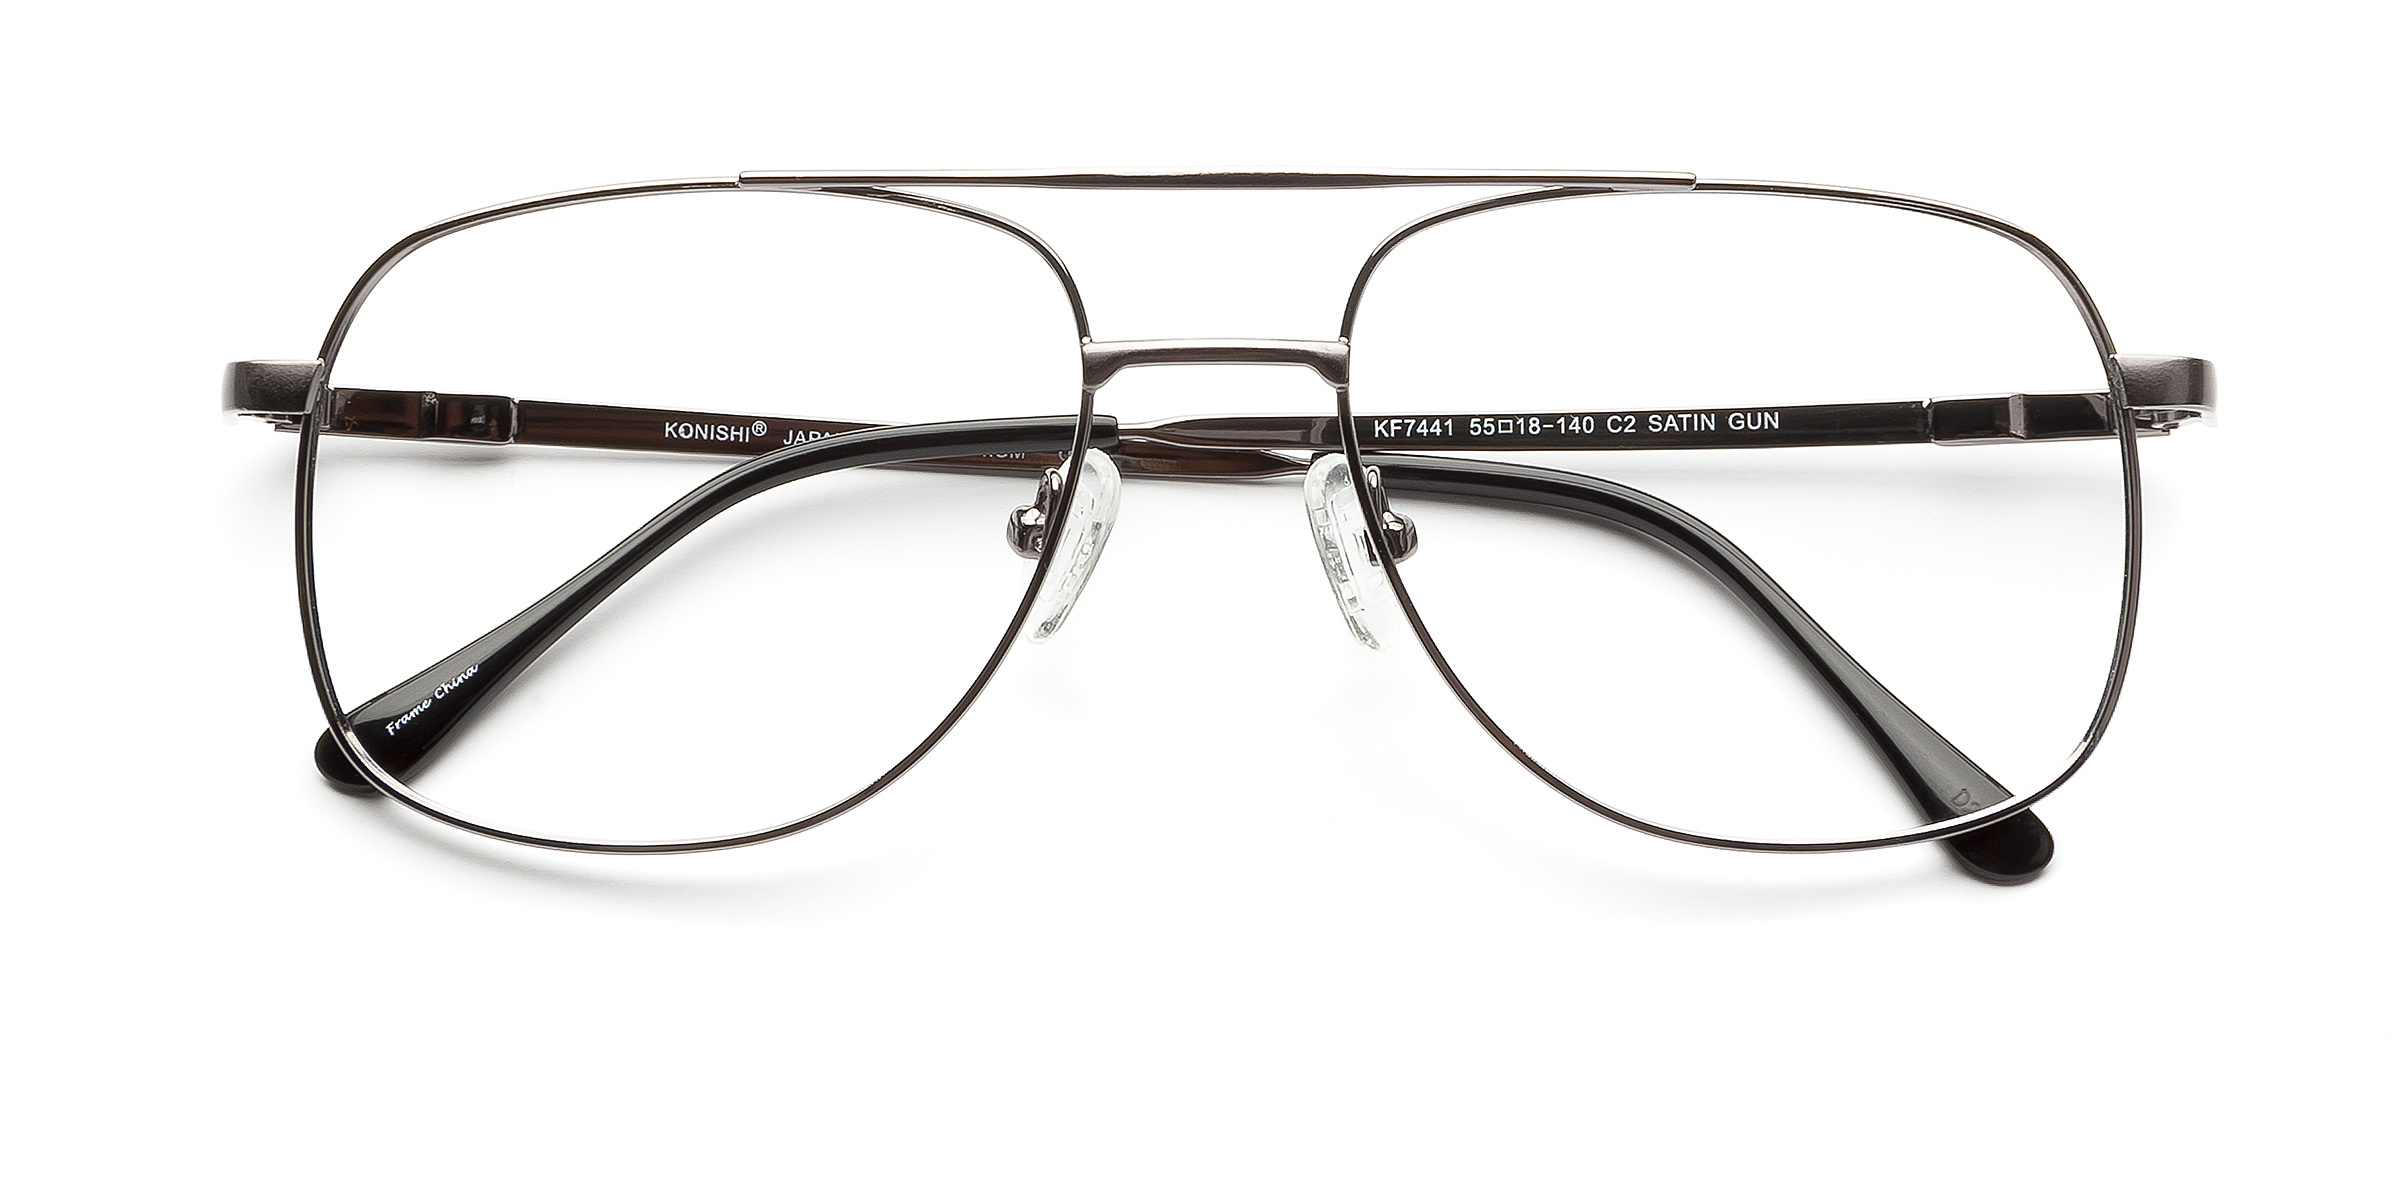 Prescription Glasses Online - Complete Eyeglasses from $35